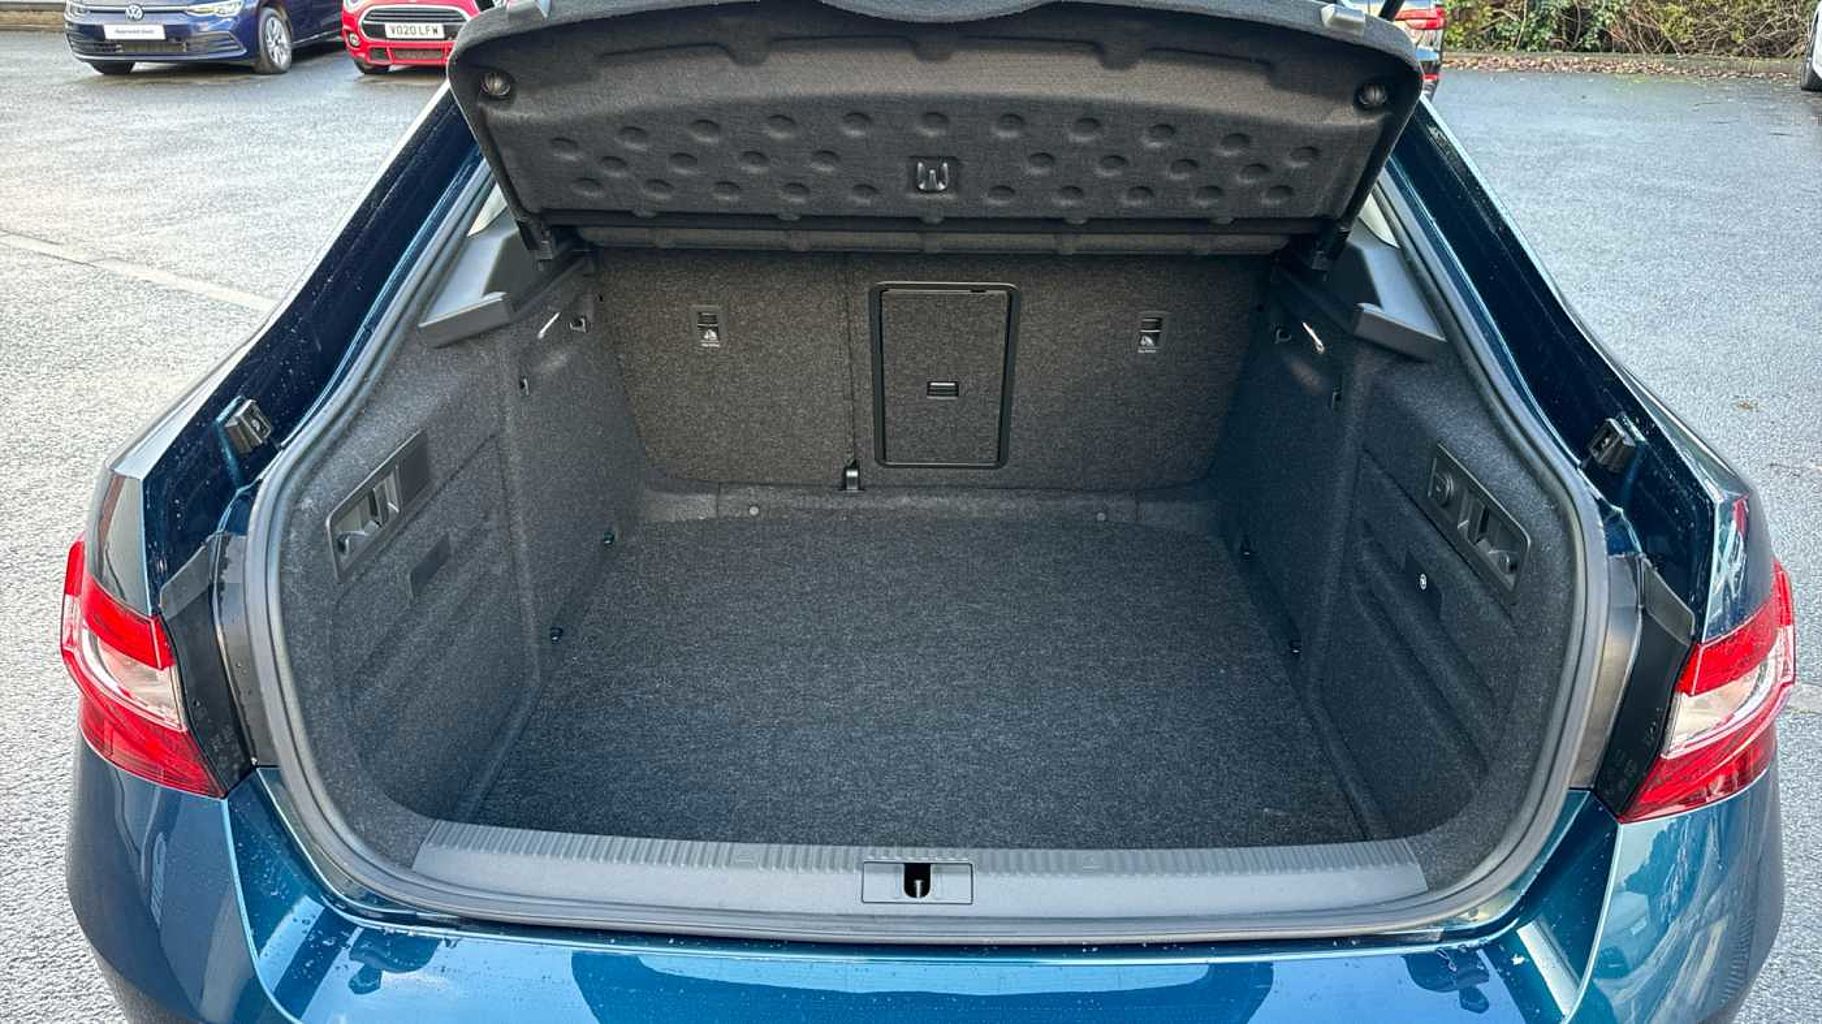 SKODA Superb 1.5 TSI (150ps) SE ACT DSG Hatchback